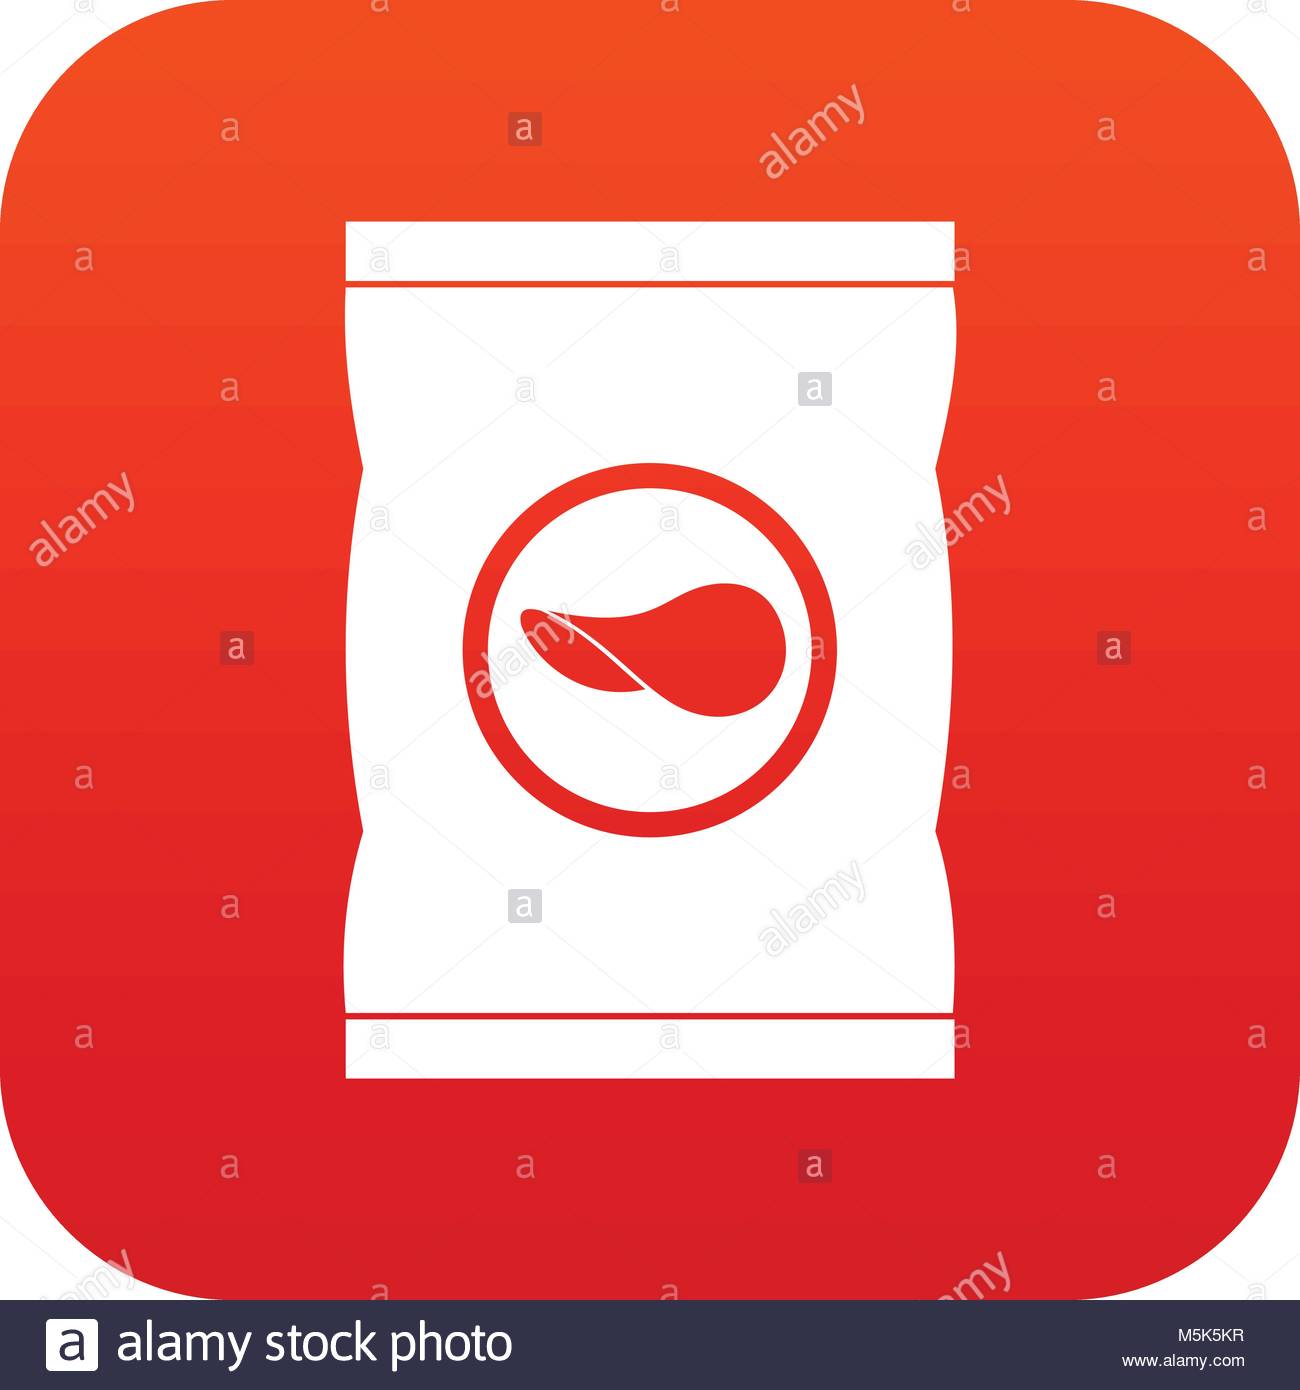 Plastic-bag icons | Noun Project